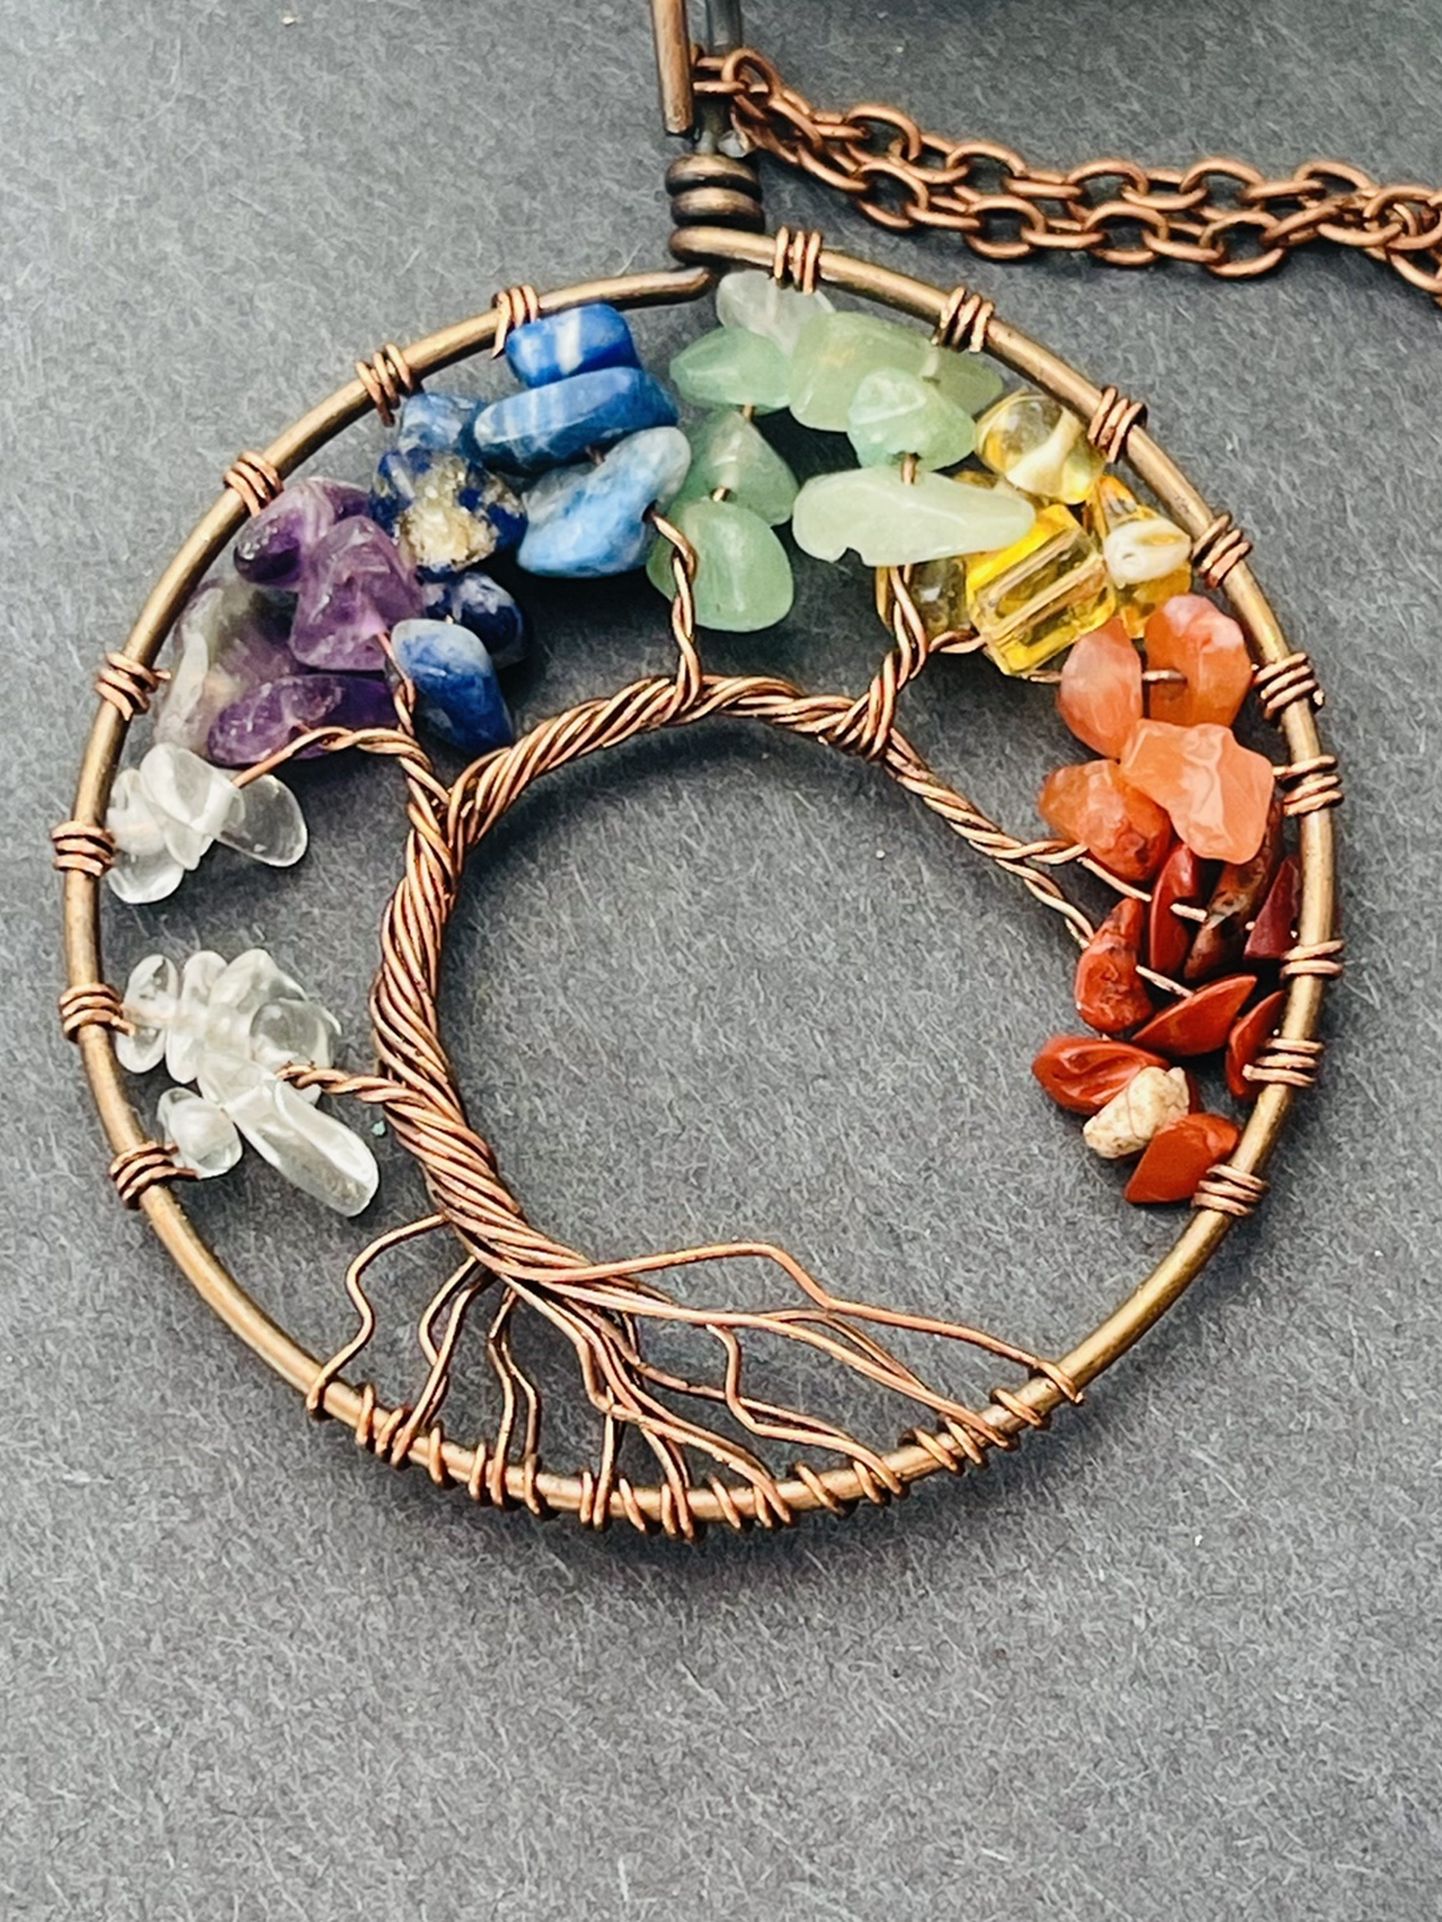 Chakra stone tree of life pendant necklace